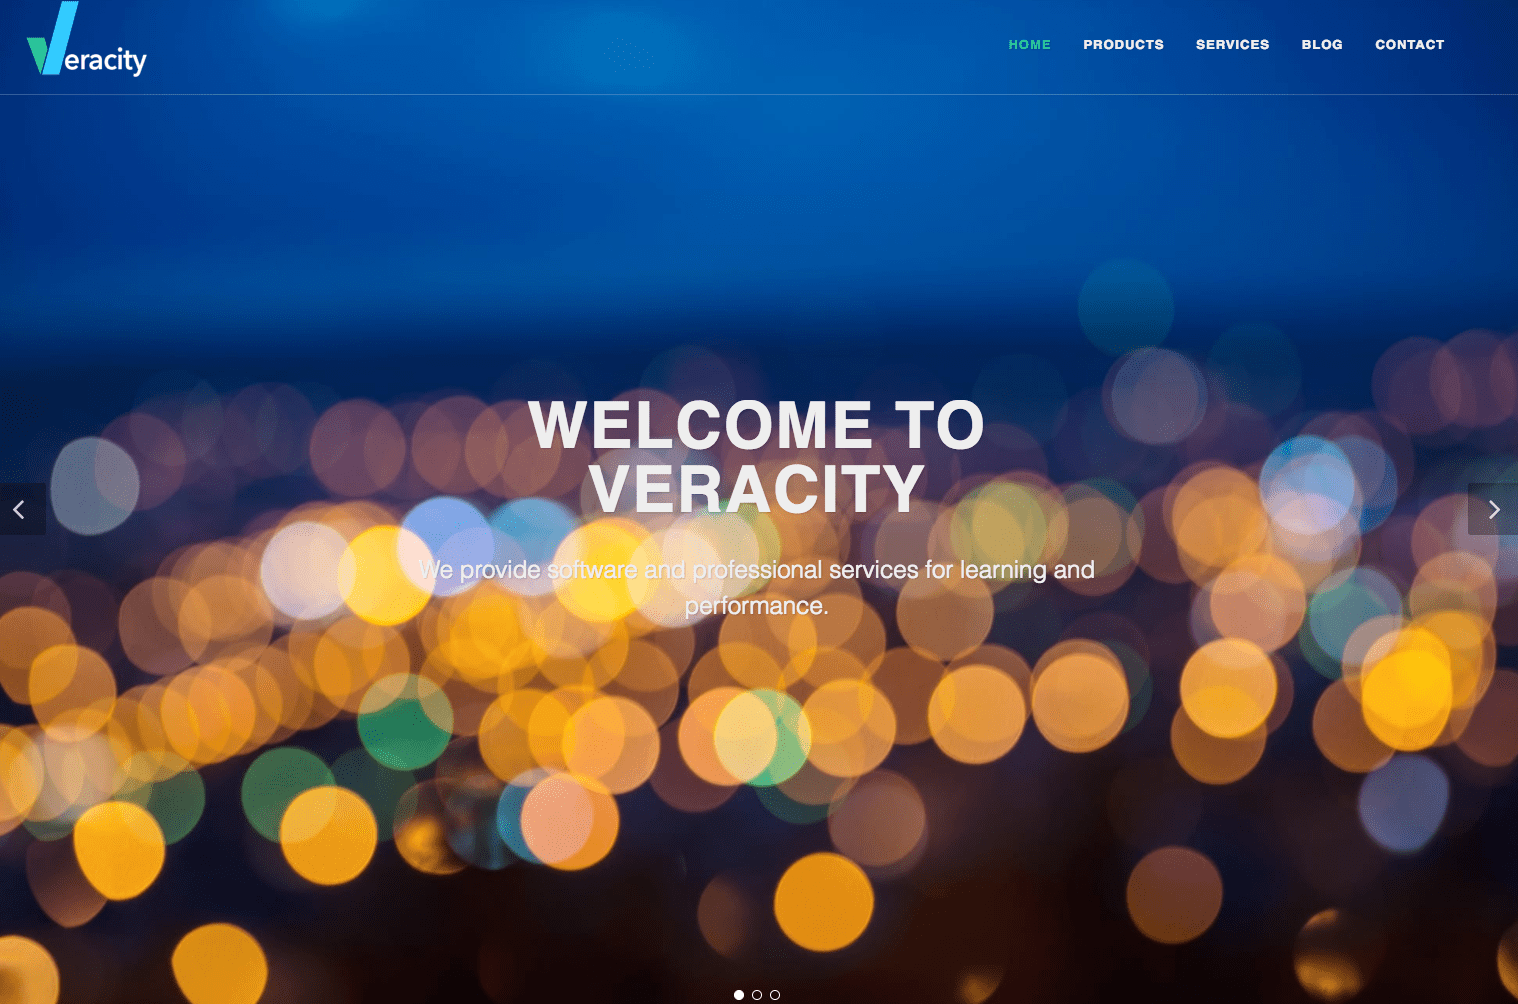 IT's Here! The New Veracity Website